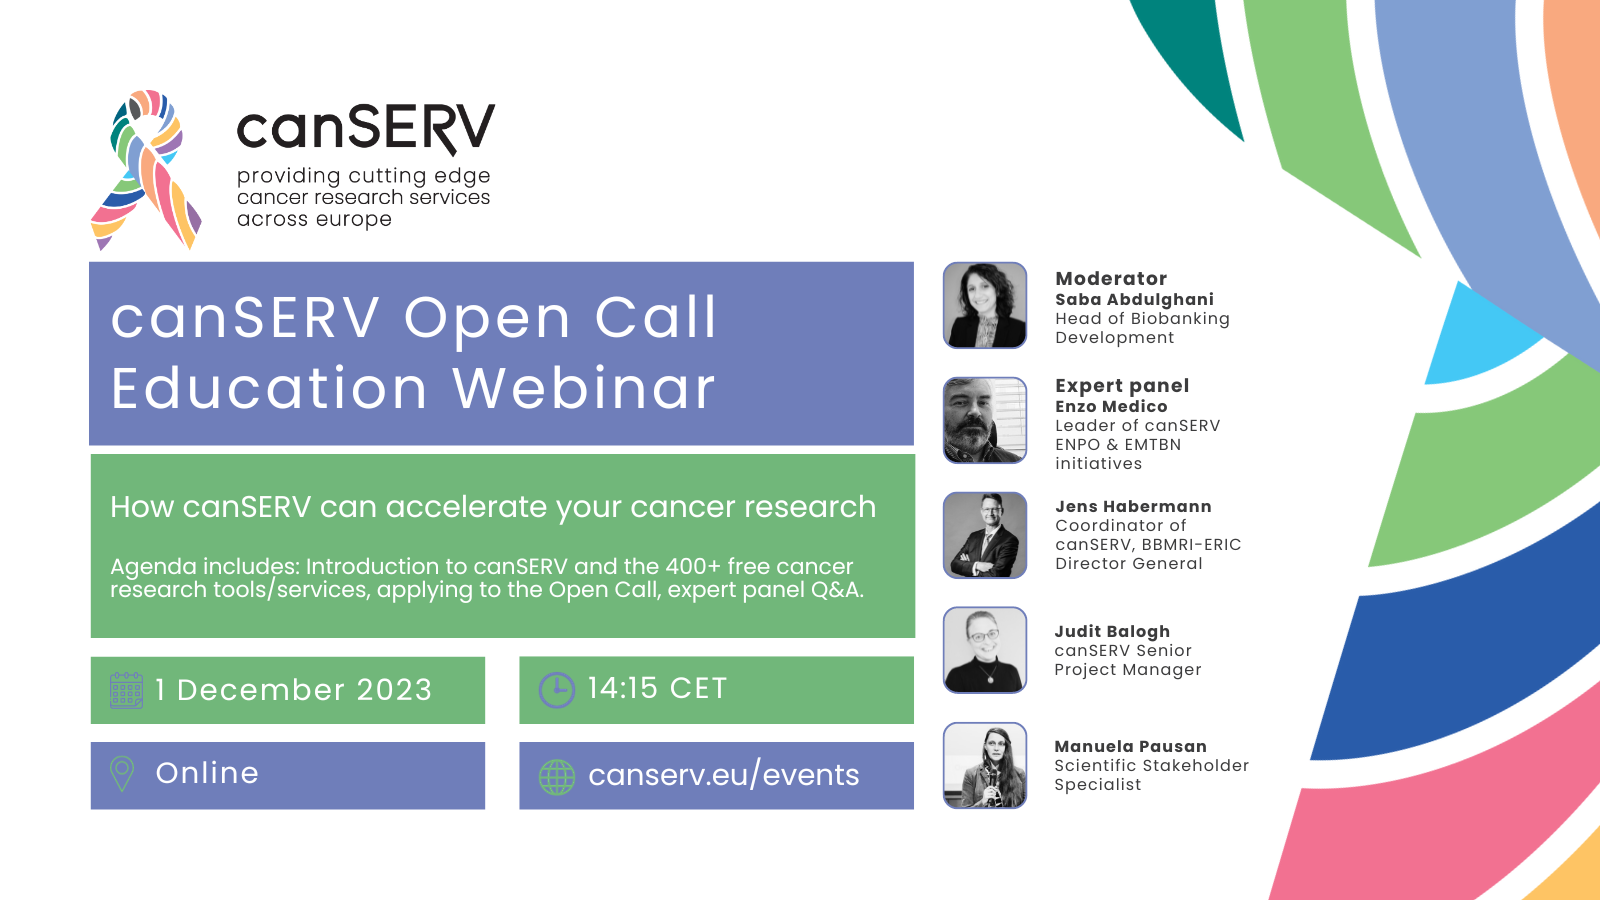 canSERV Open Call Education Webinar